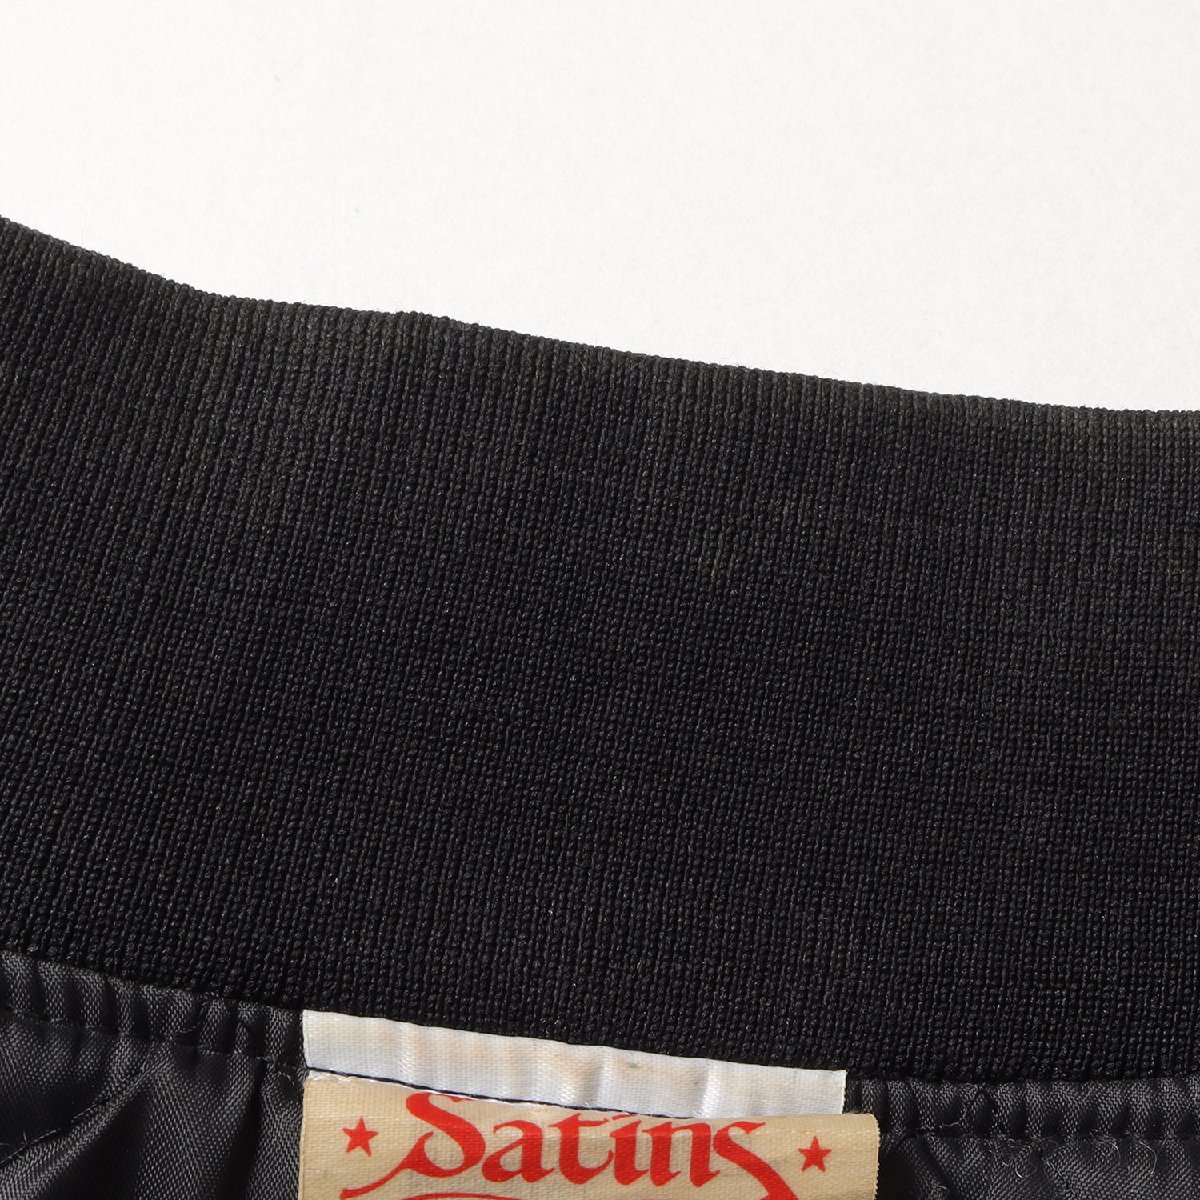 90s 企業ロゴ刺繍入り 裏キルティング ナイロン サテンスタジャン 90年代 USA製 Satins サテンズ ブラック 黒 XL ヴィンテージ古着_画像6